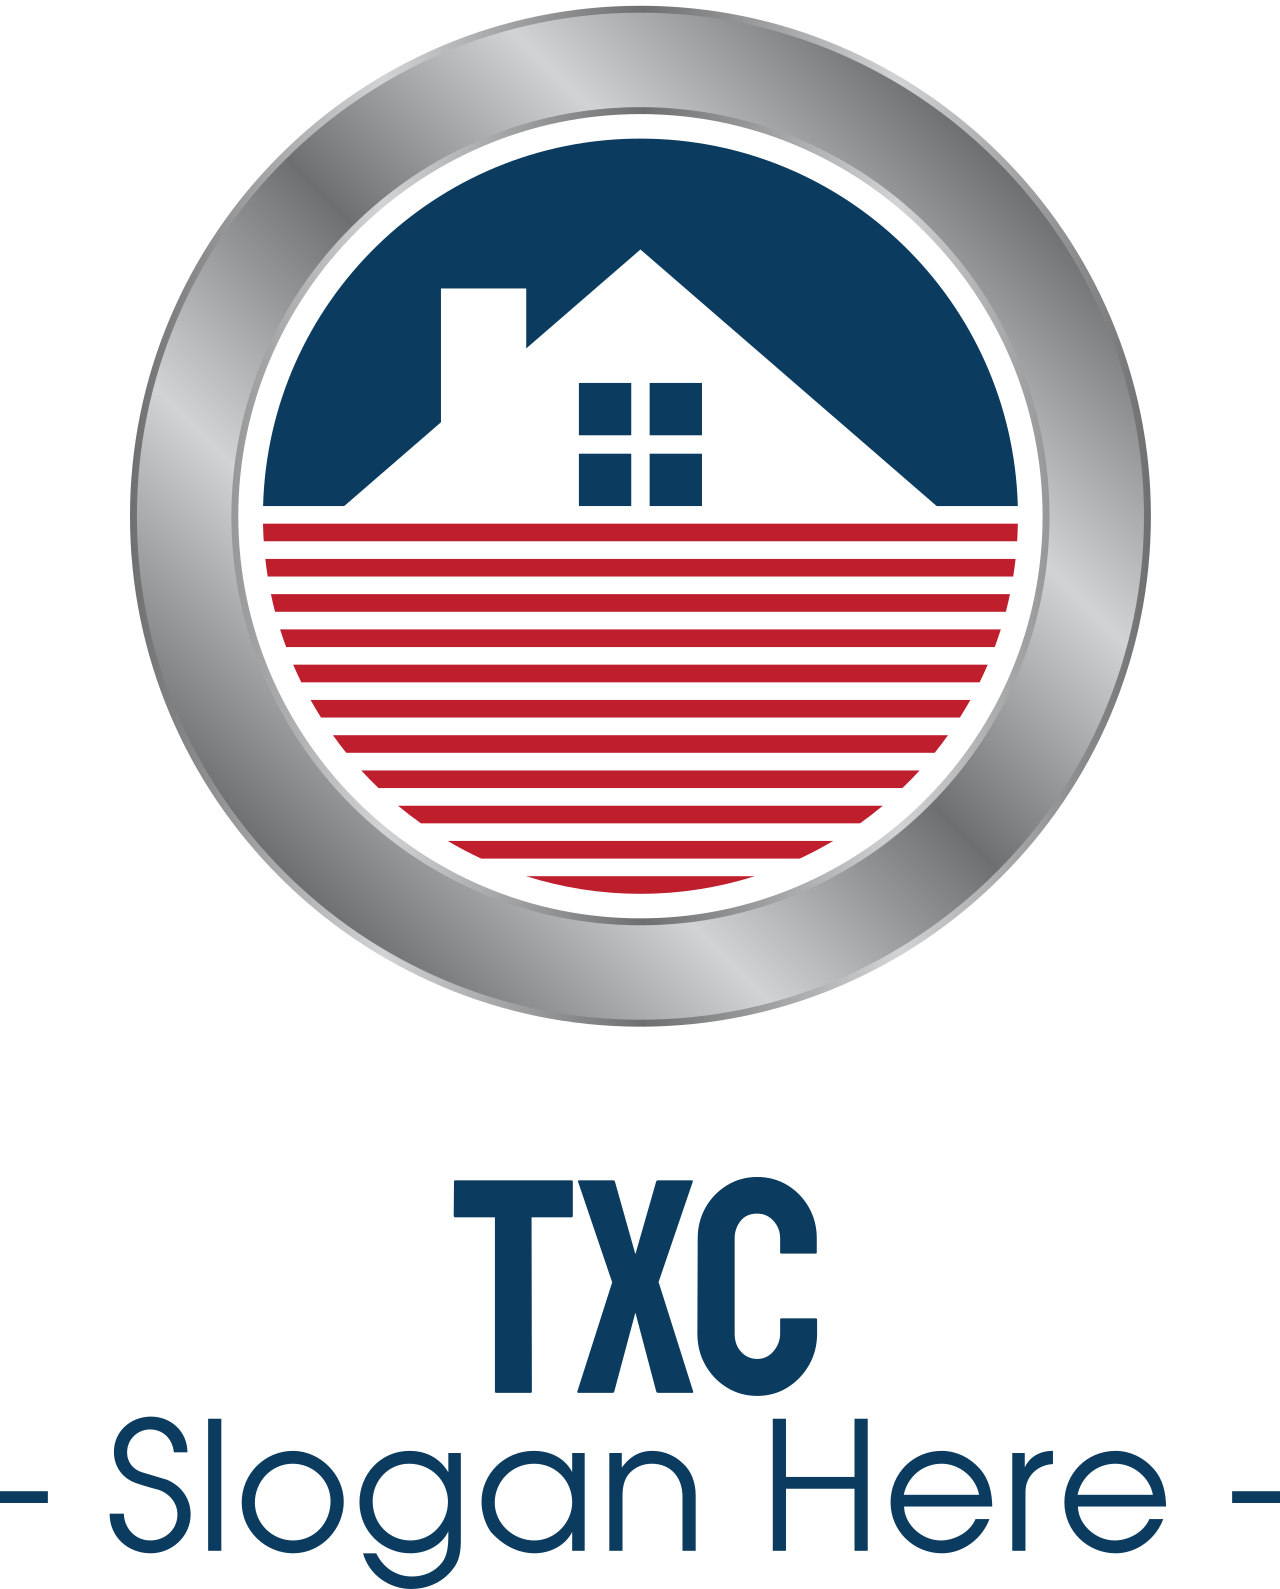 TXC's web page